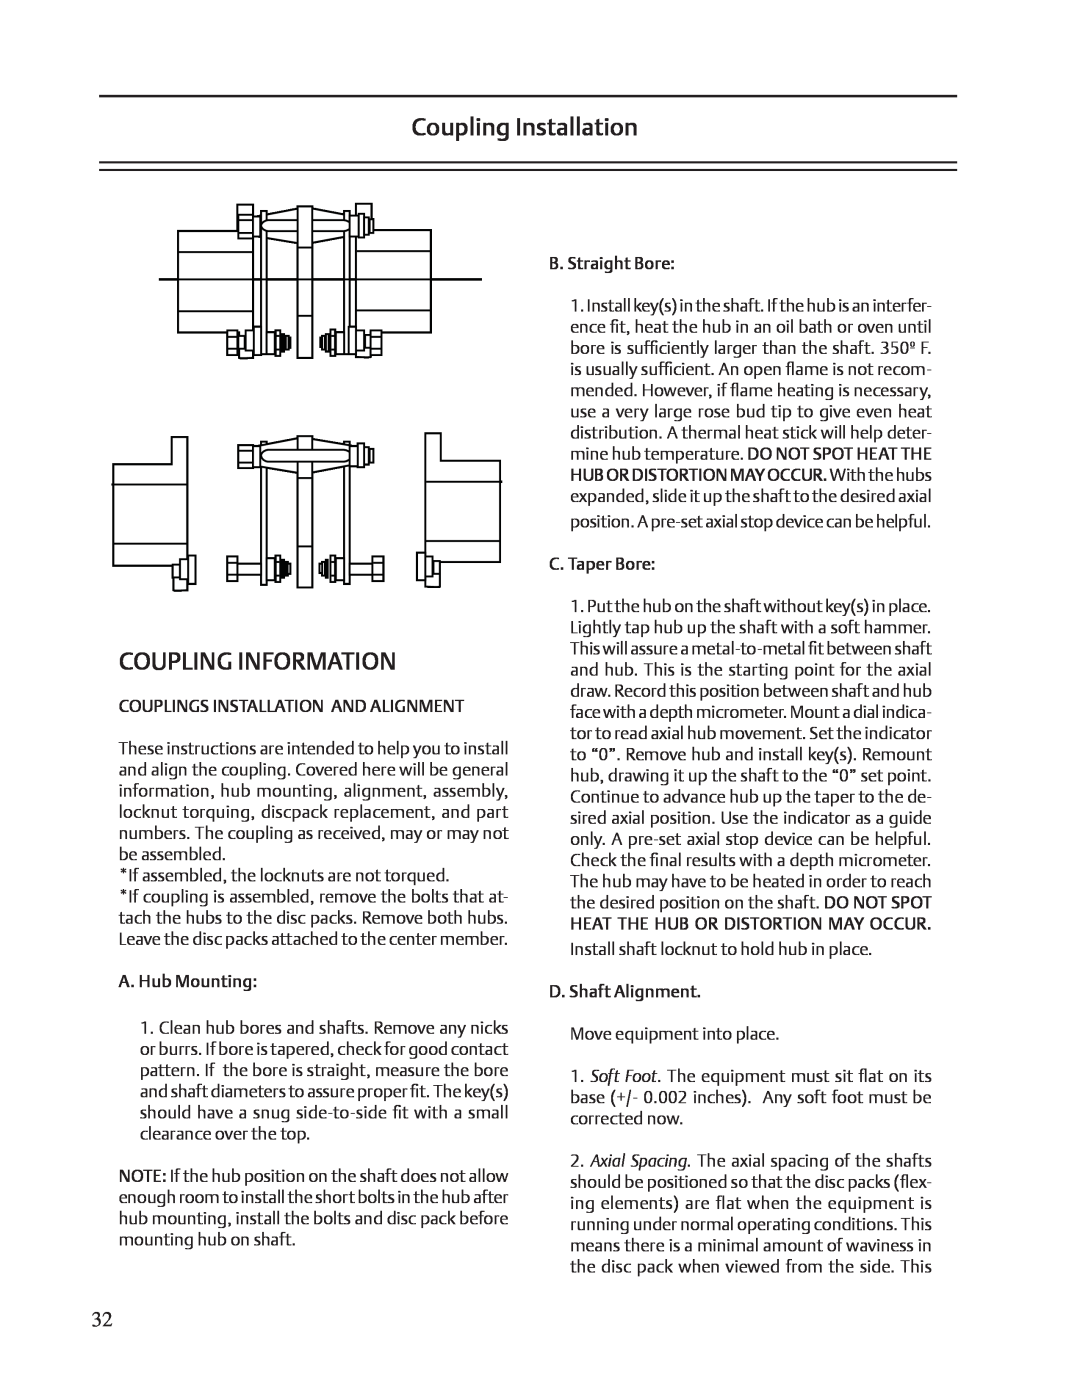 Emerson VSS, VSR, VSM service manual Coupling Installation, Coupling Information 